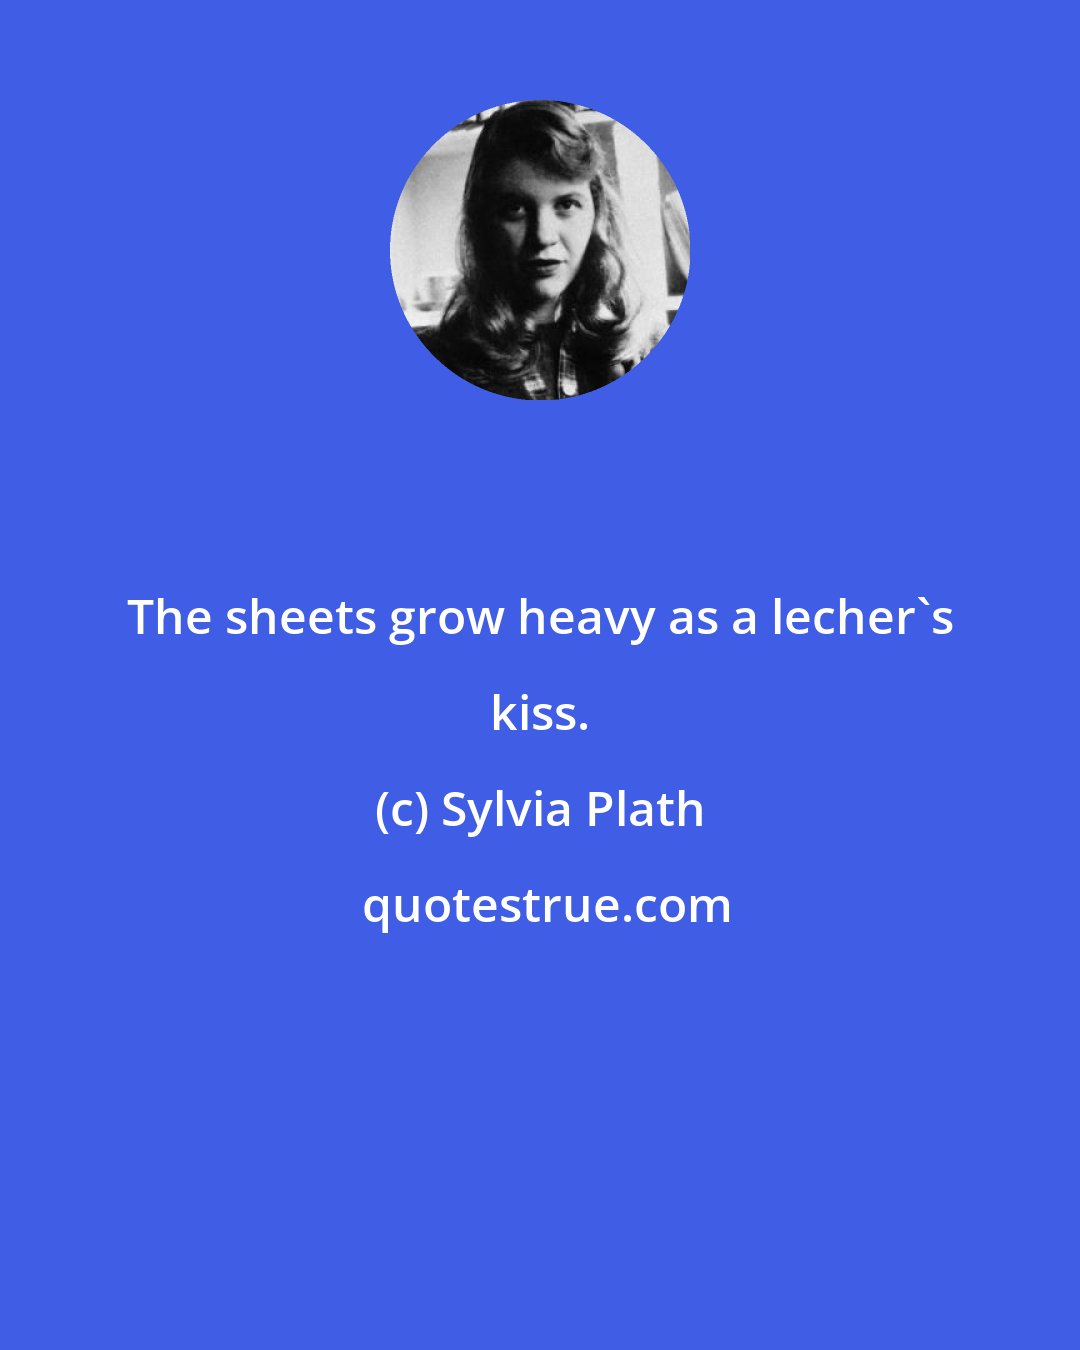 Sylvia Plath: The sheets grow heavy as a lecher's kiss.